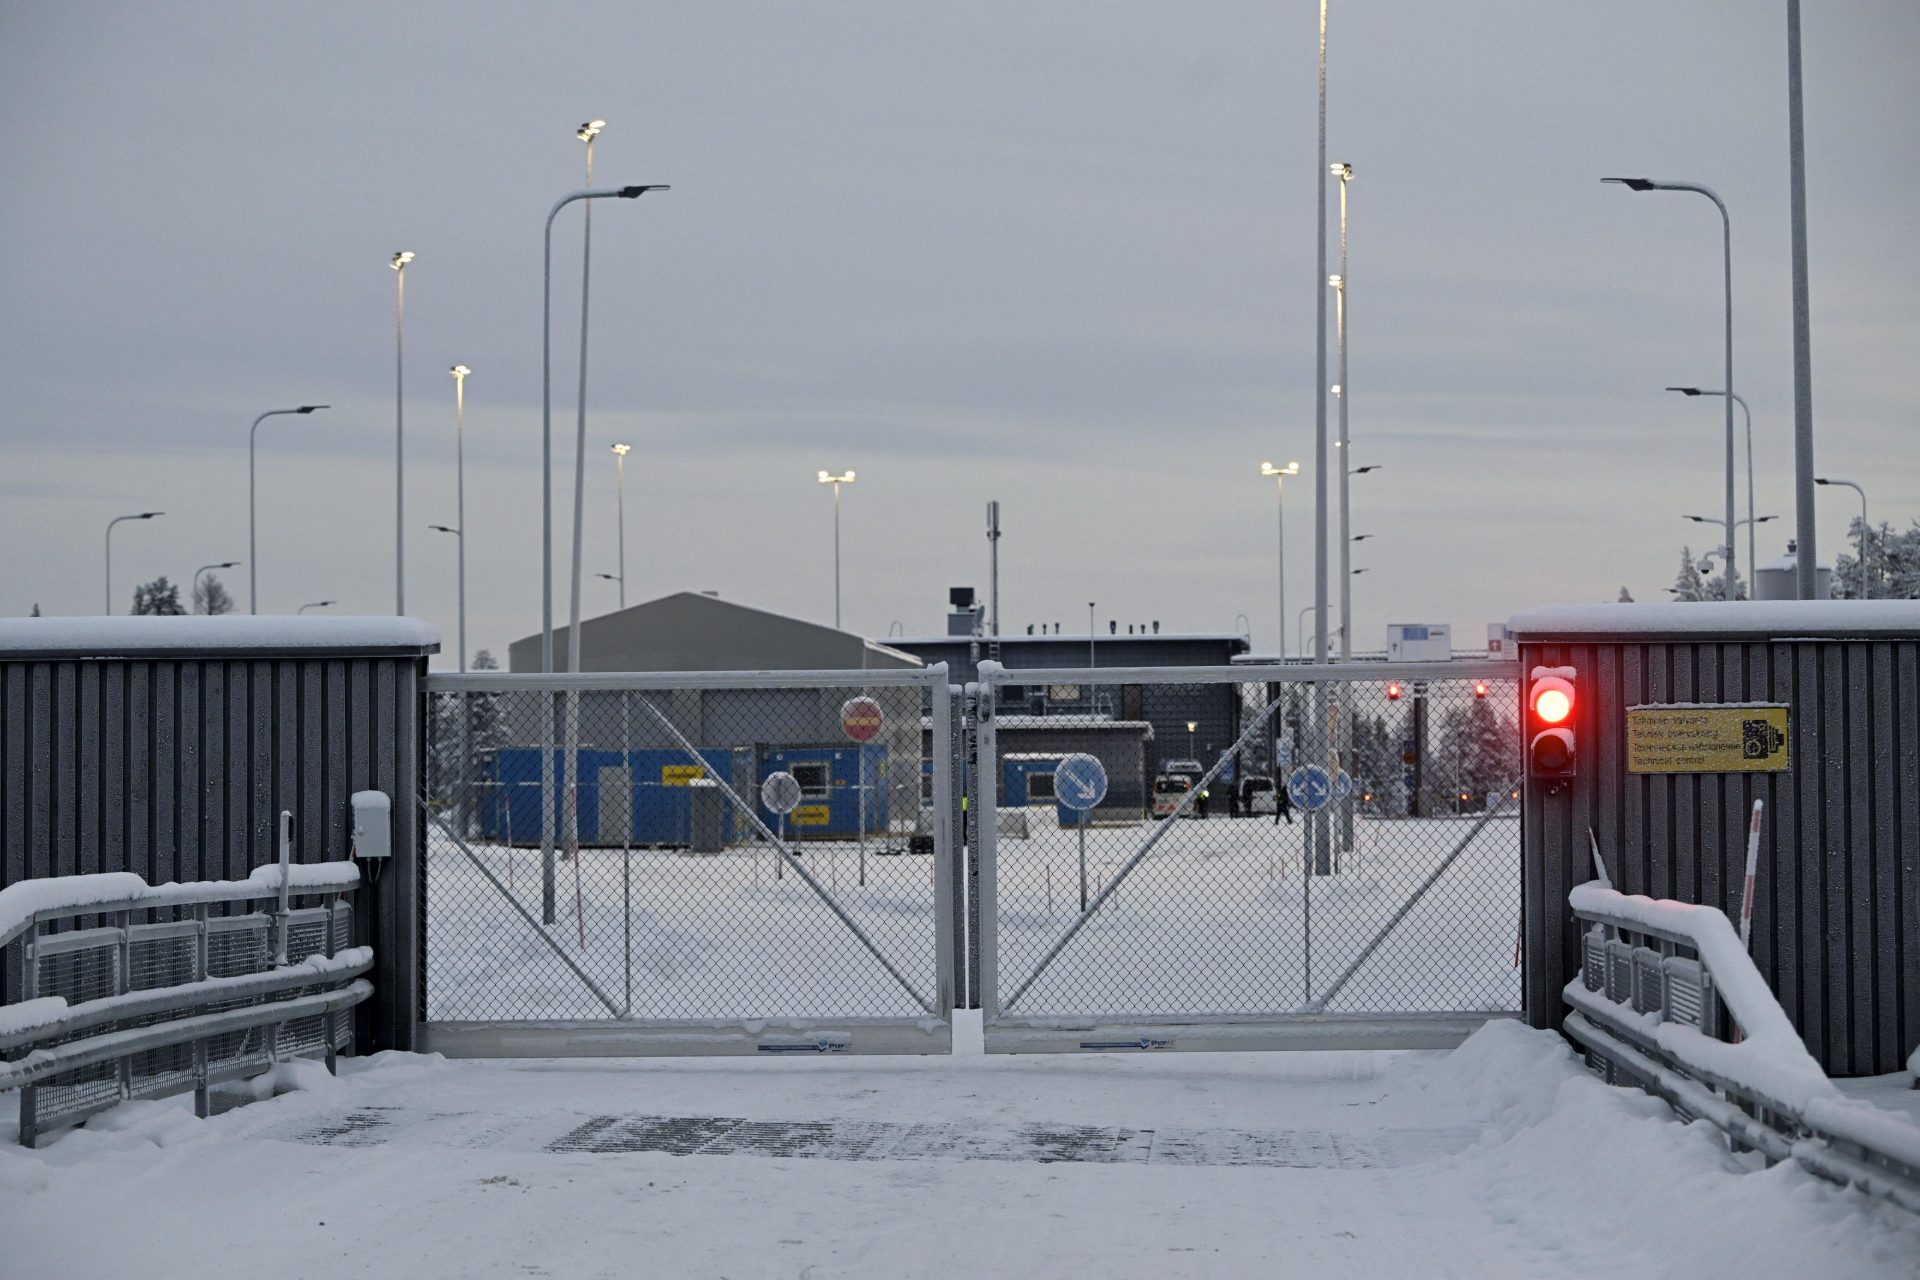 One border crossing was left open 